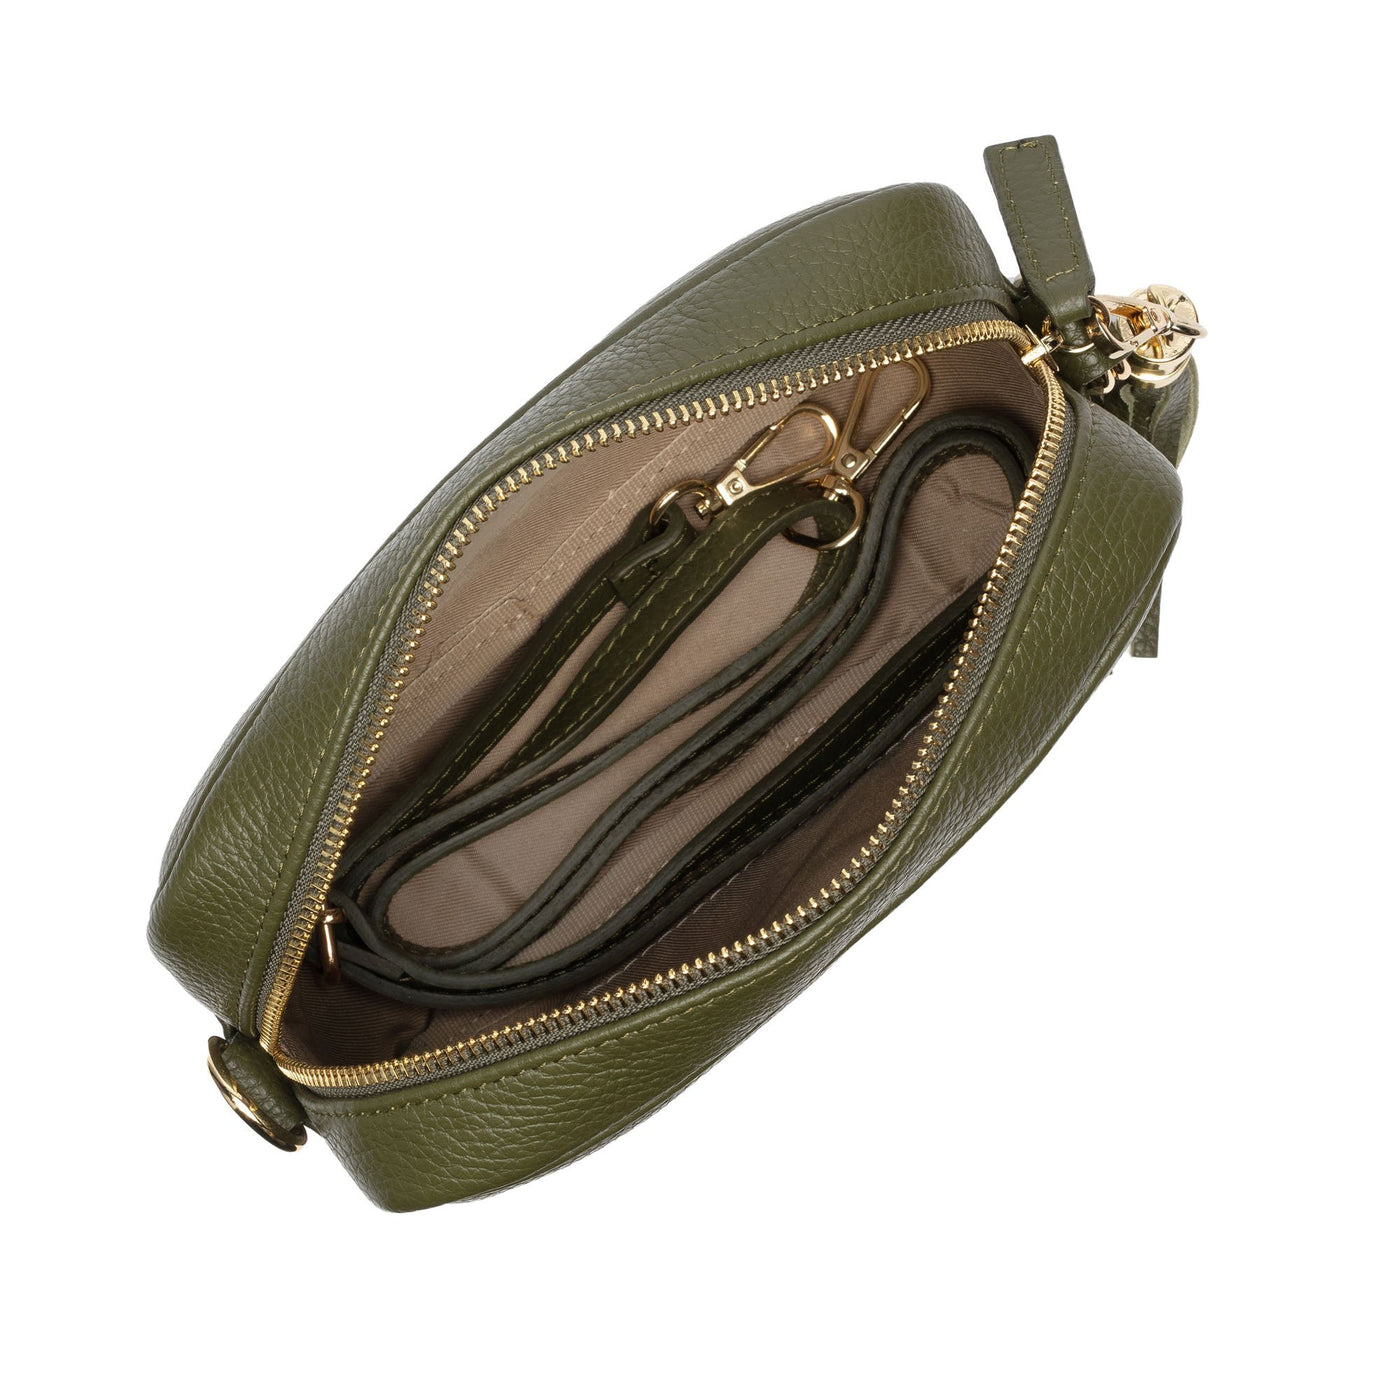 Elie Beaumont Designer Leather Crossbody Bag - Olive Green (GOLD Fittings)